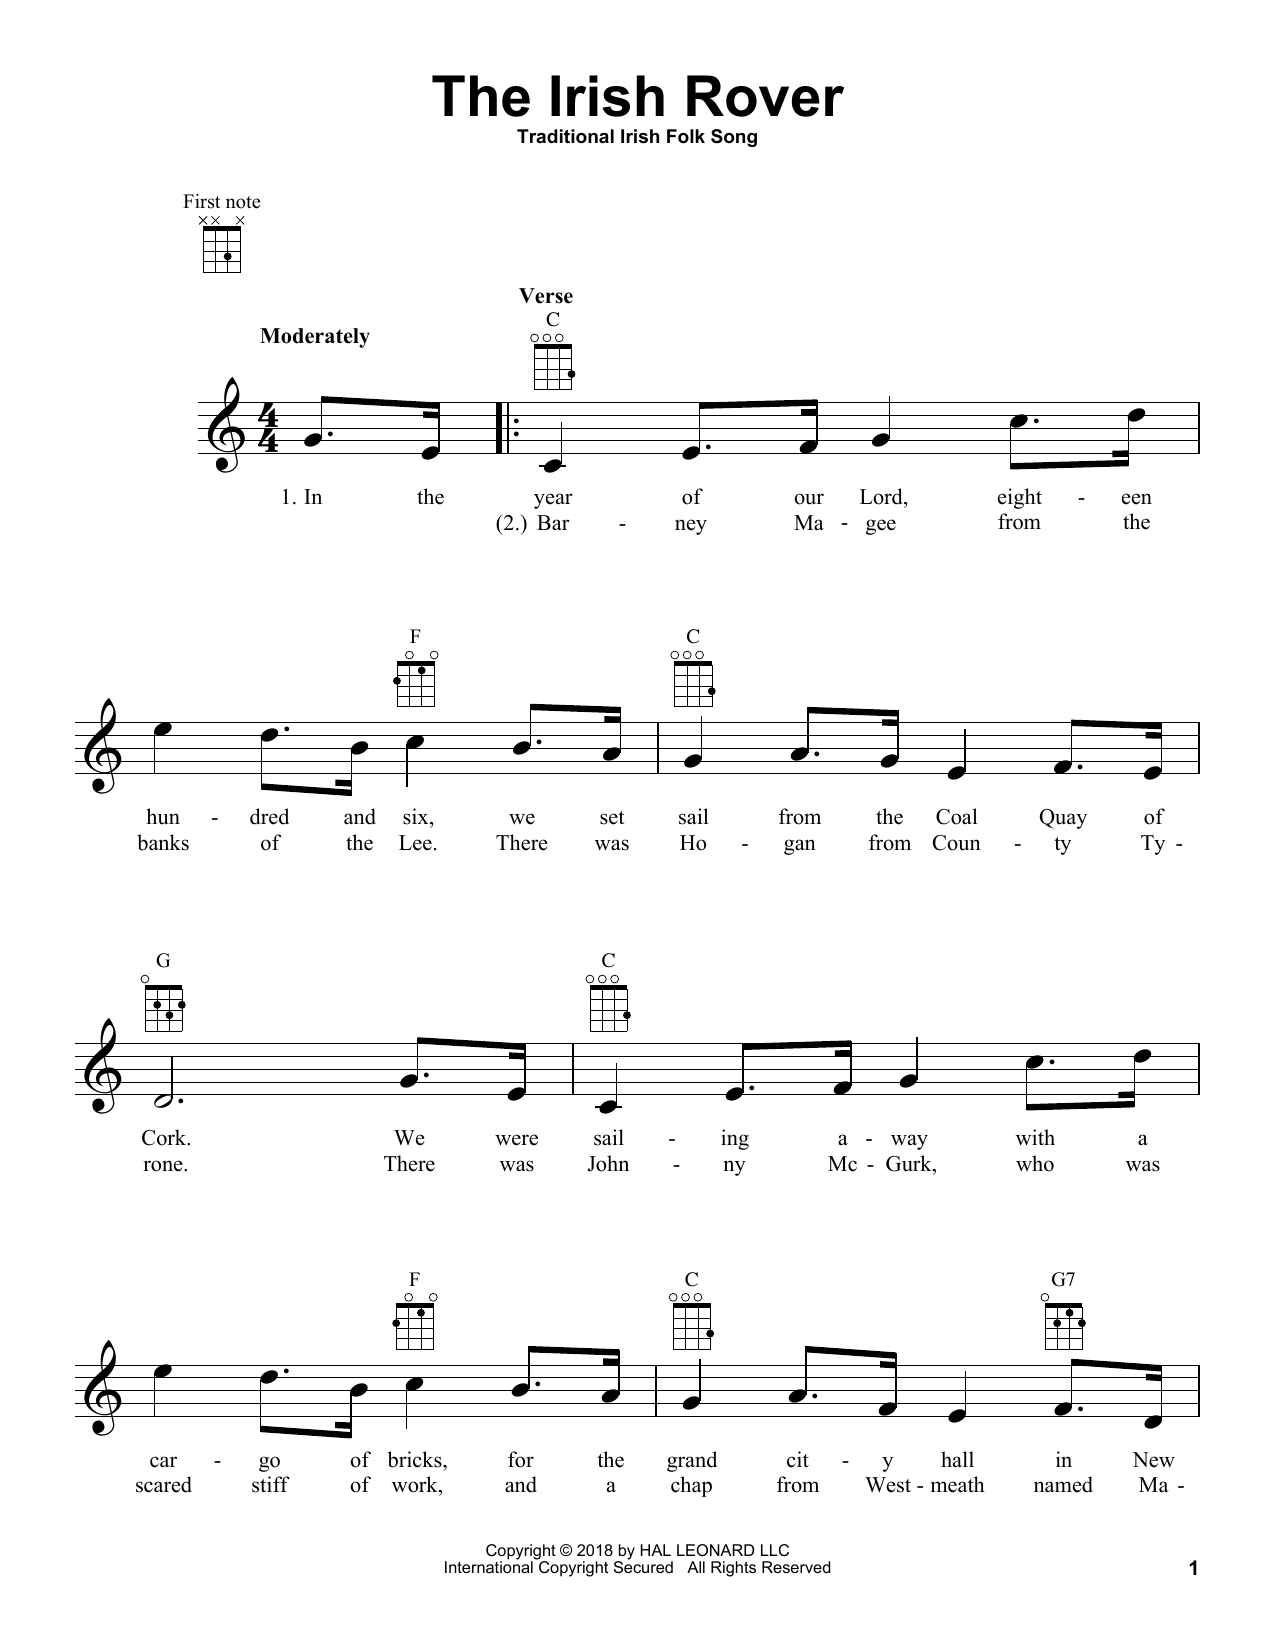 Download Traditional Irish Folk Song The Irish Rover Sheet Music